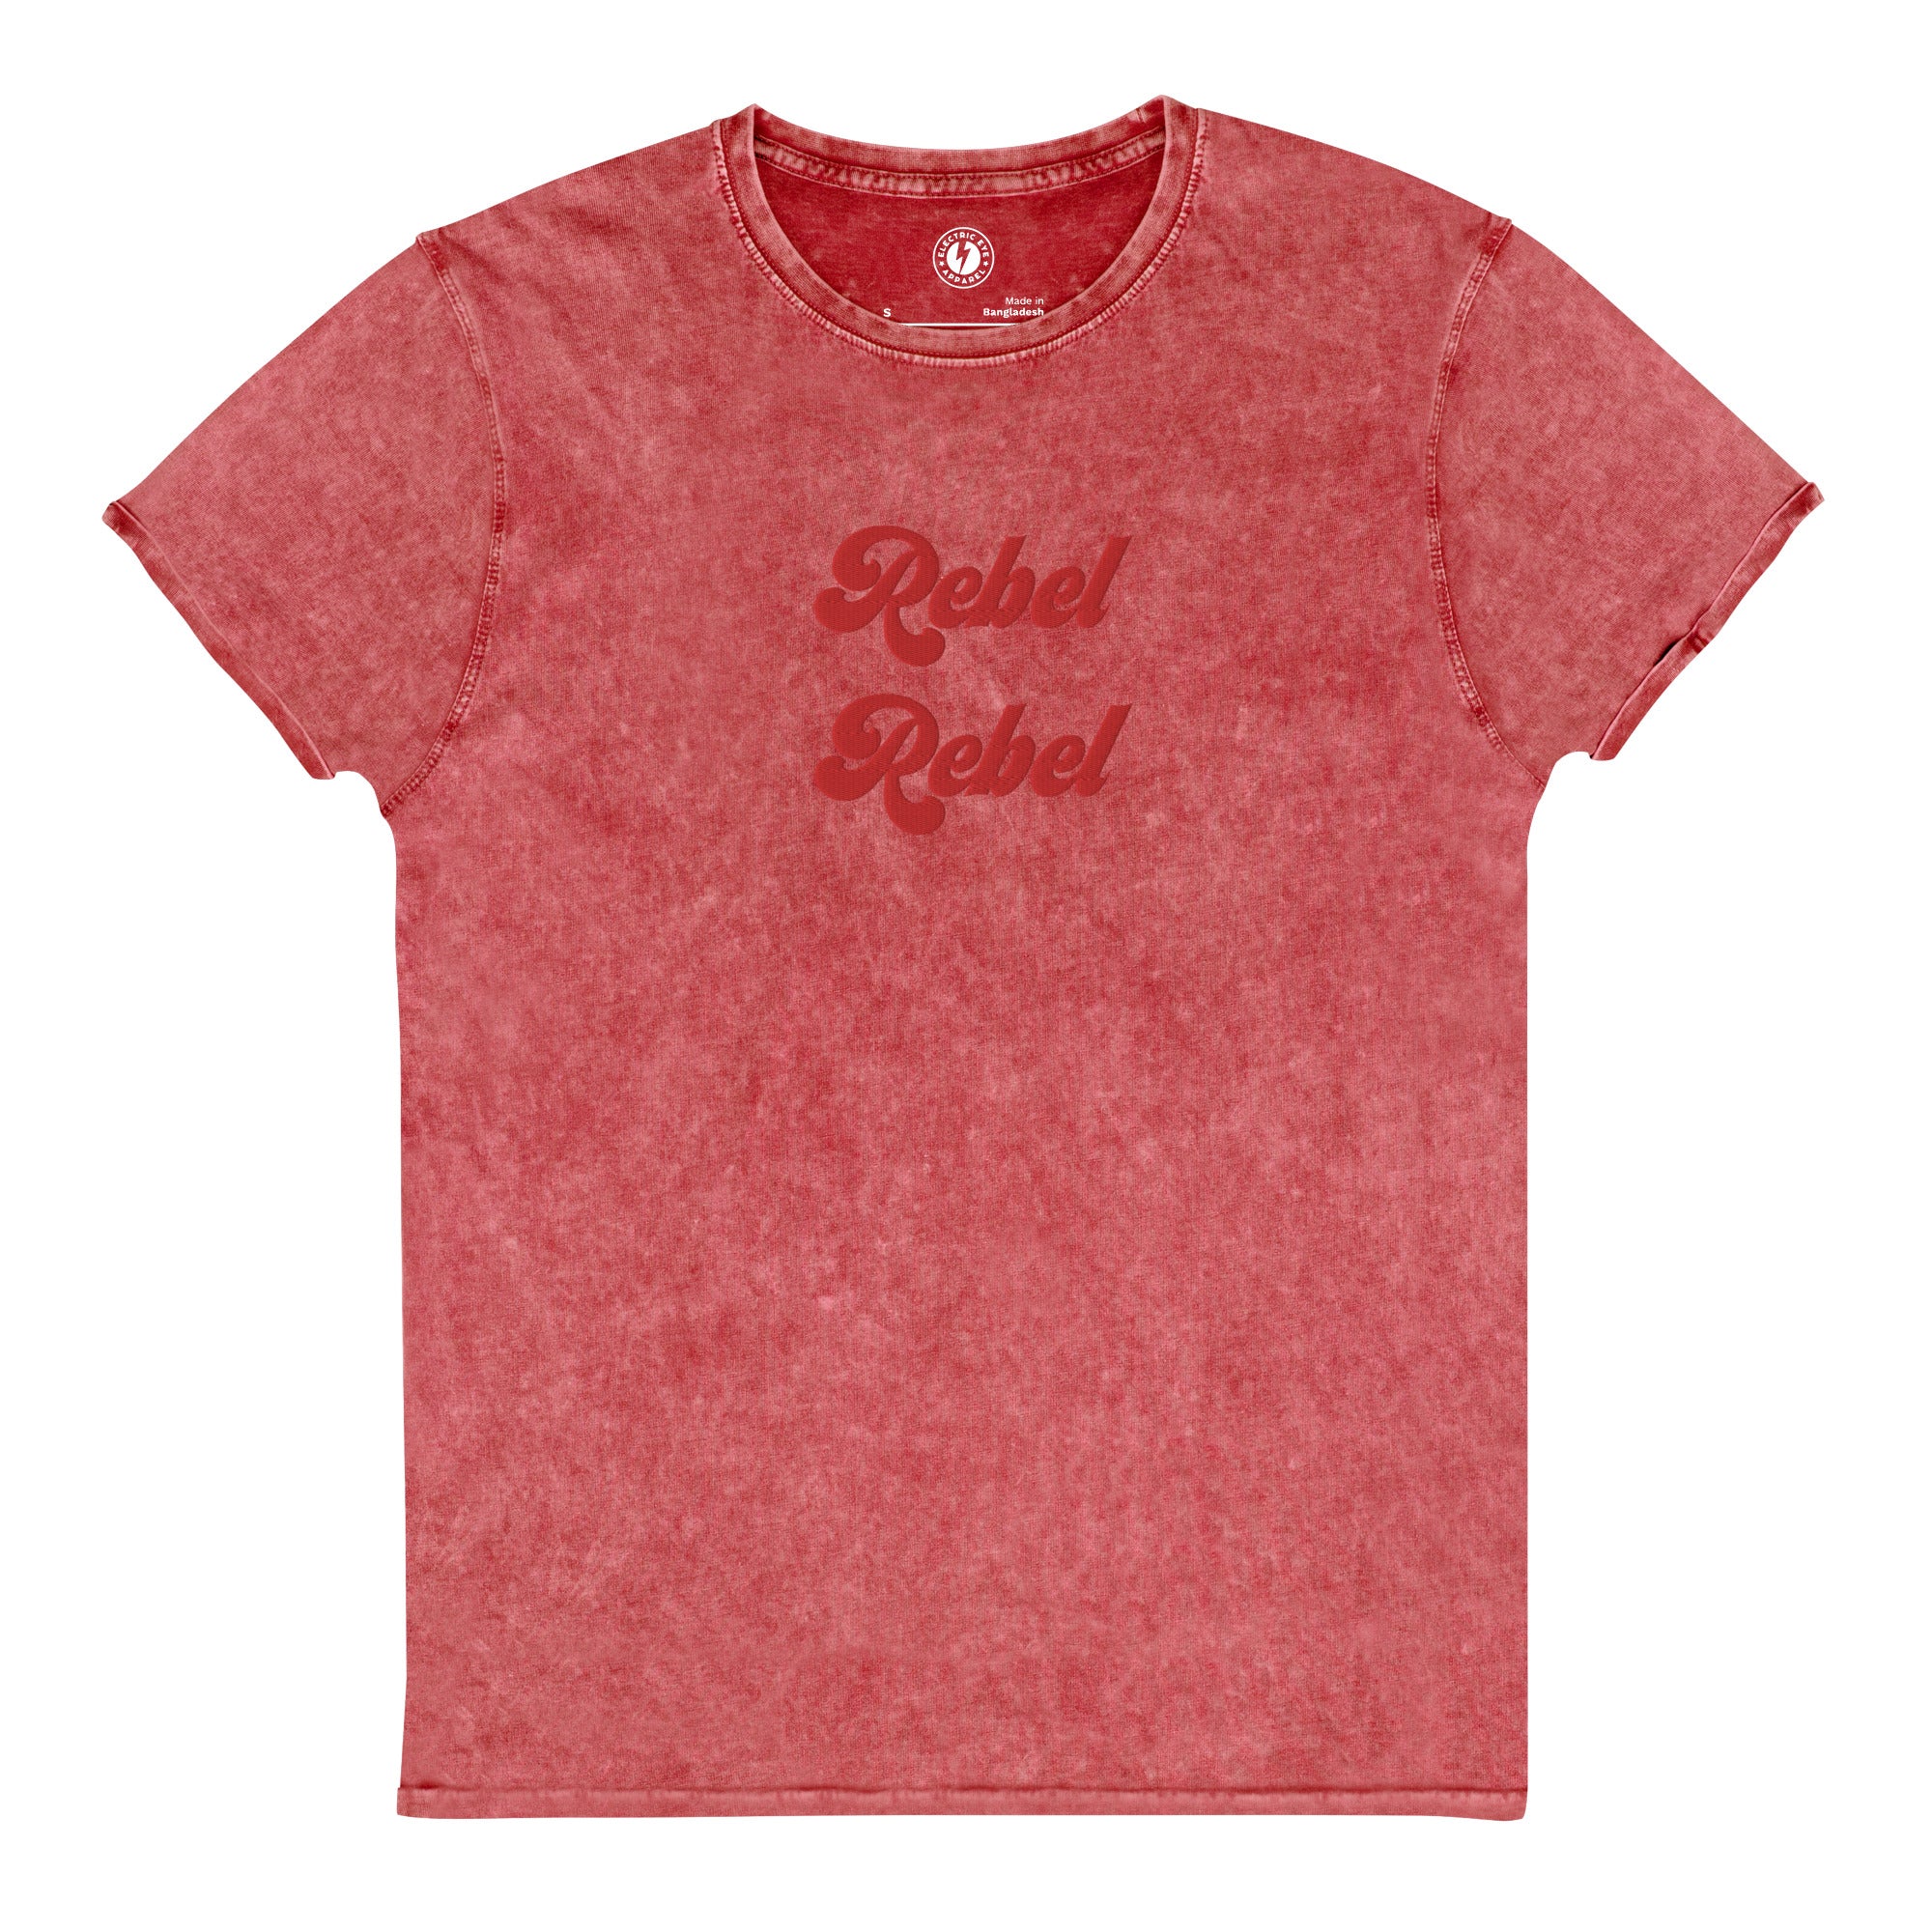 REBEL REBEL Camiseta unisex estilo denim envejecido vintage bordado